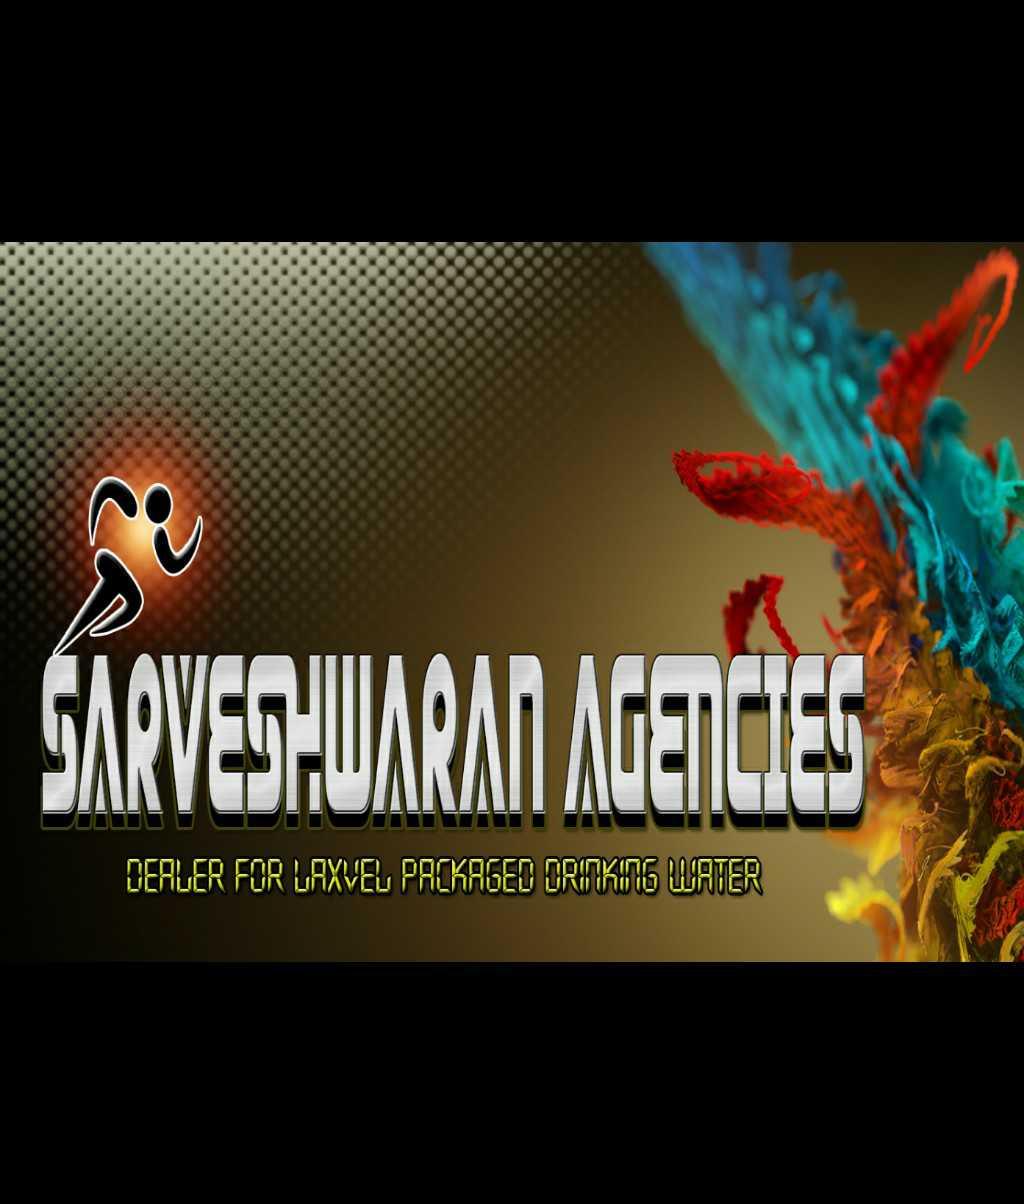 Sarveshwaran agencies